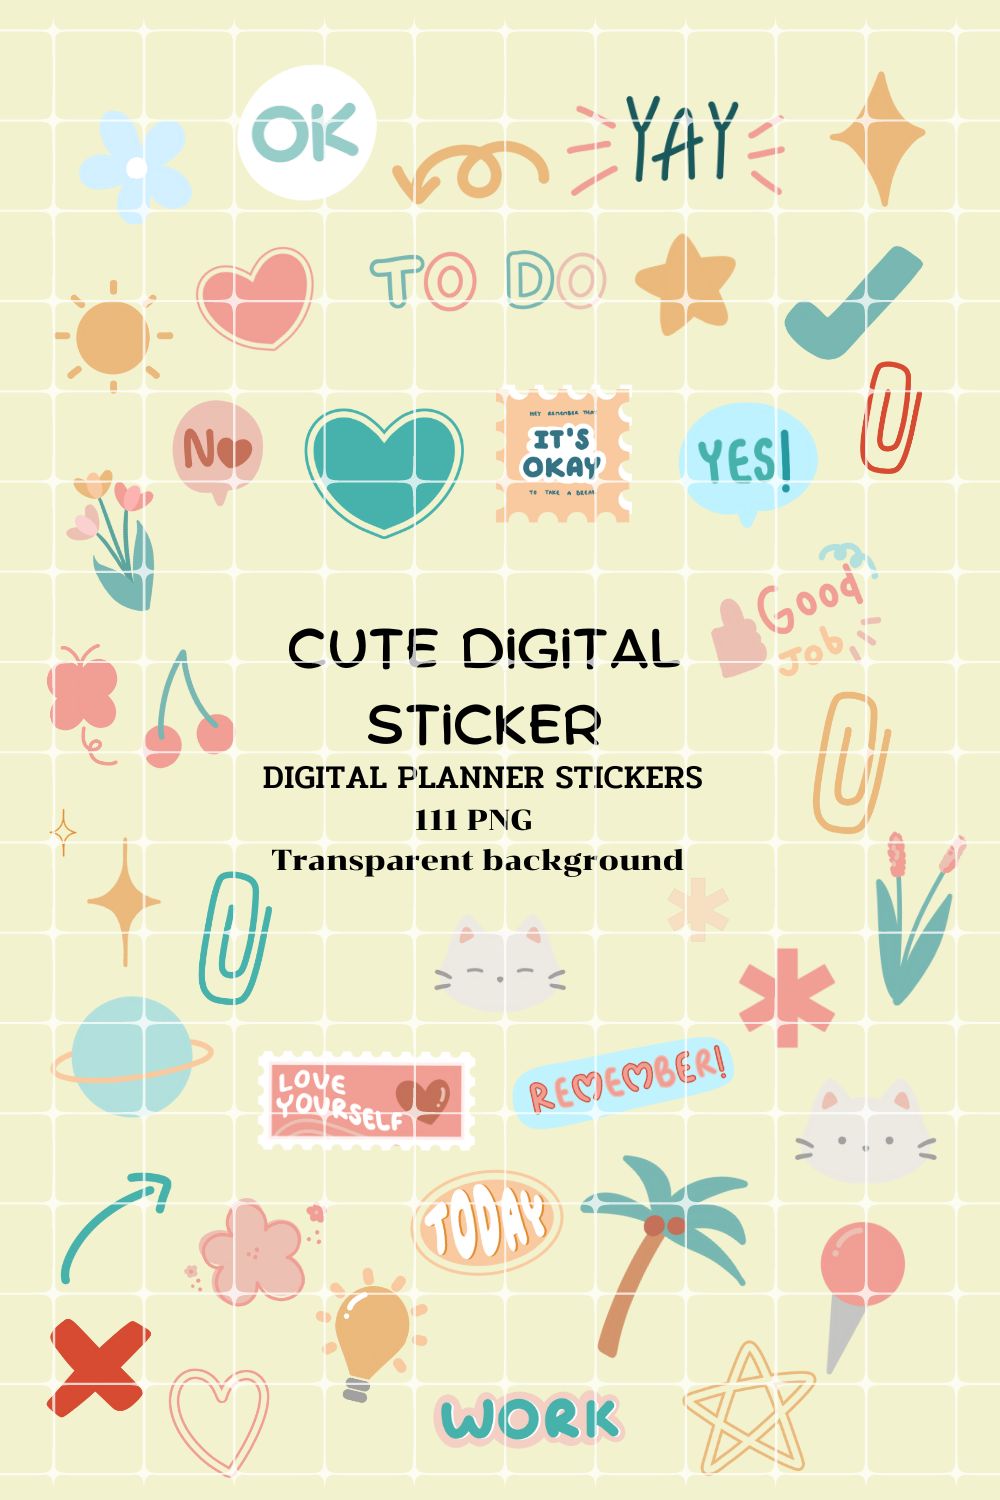 Cutie Digital Sticker pack - 111 PNG transparent background pinterest preview image.